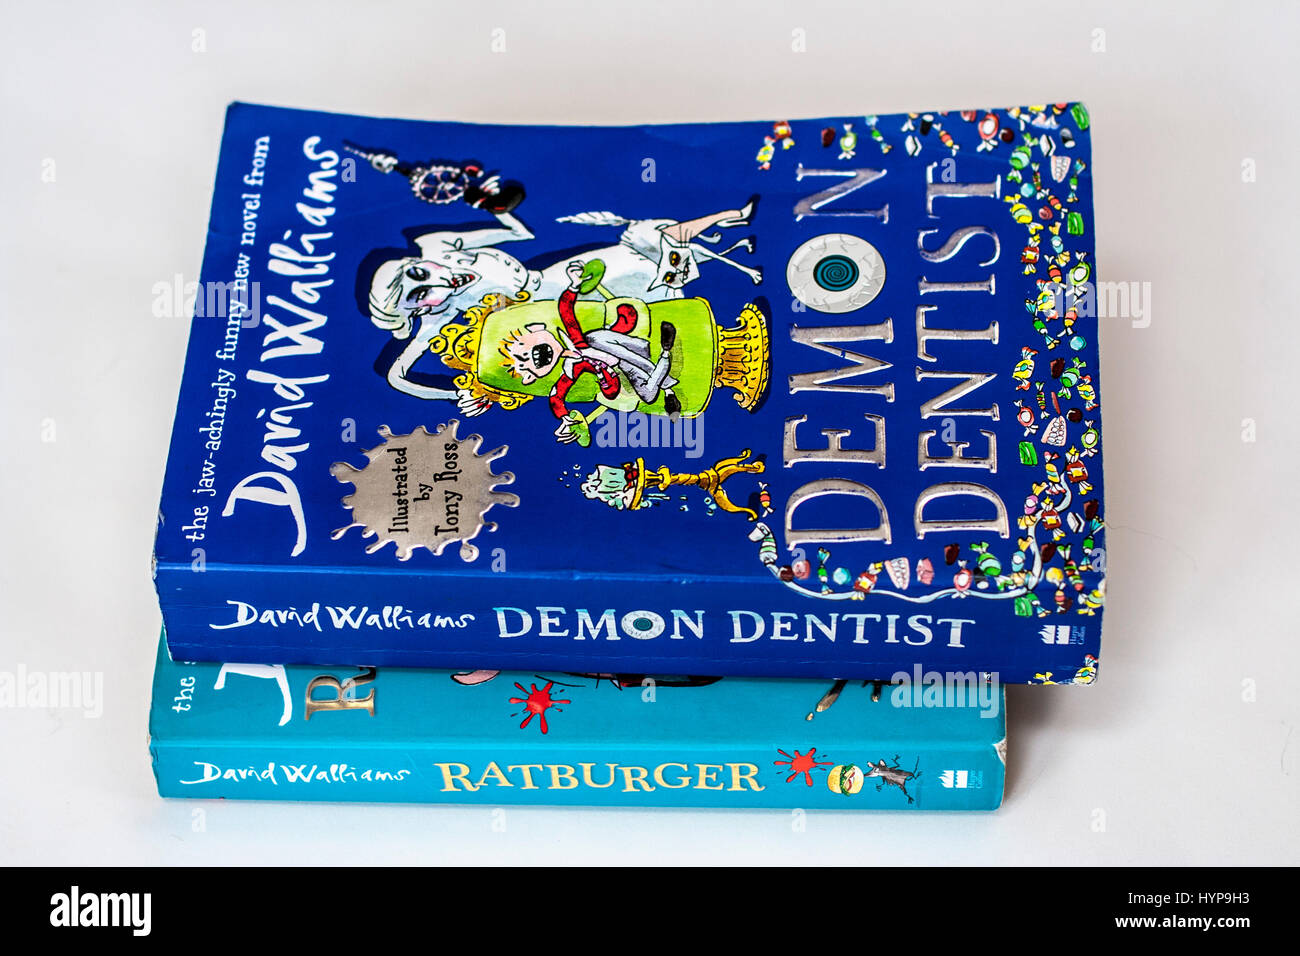 David Walliams book covers- Demon Dentist & Ratburger, children's books, kids books Stock Photo